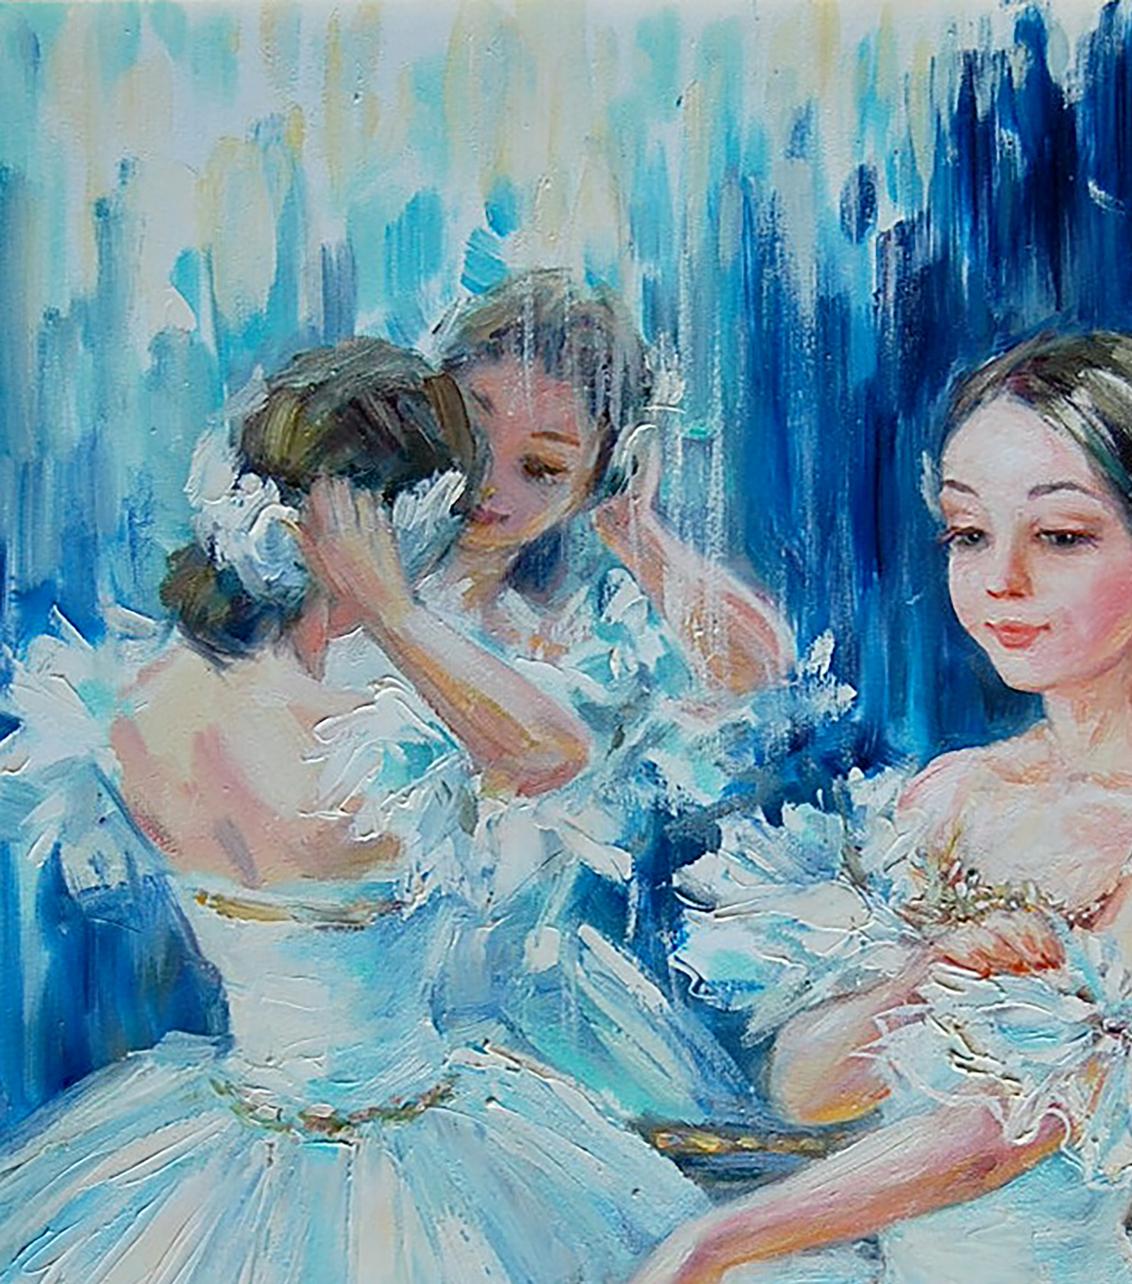 Oil painting "Ballerinas" by Olga Artim